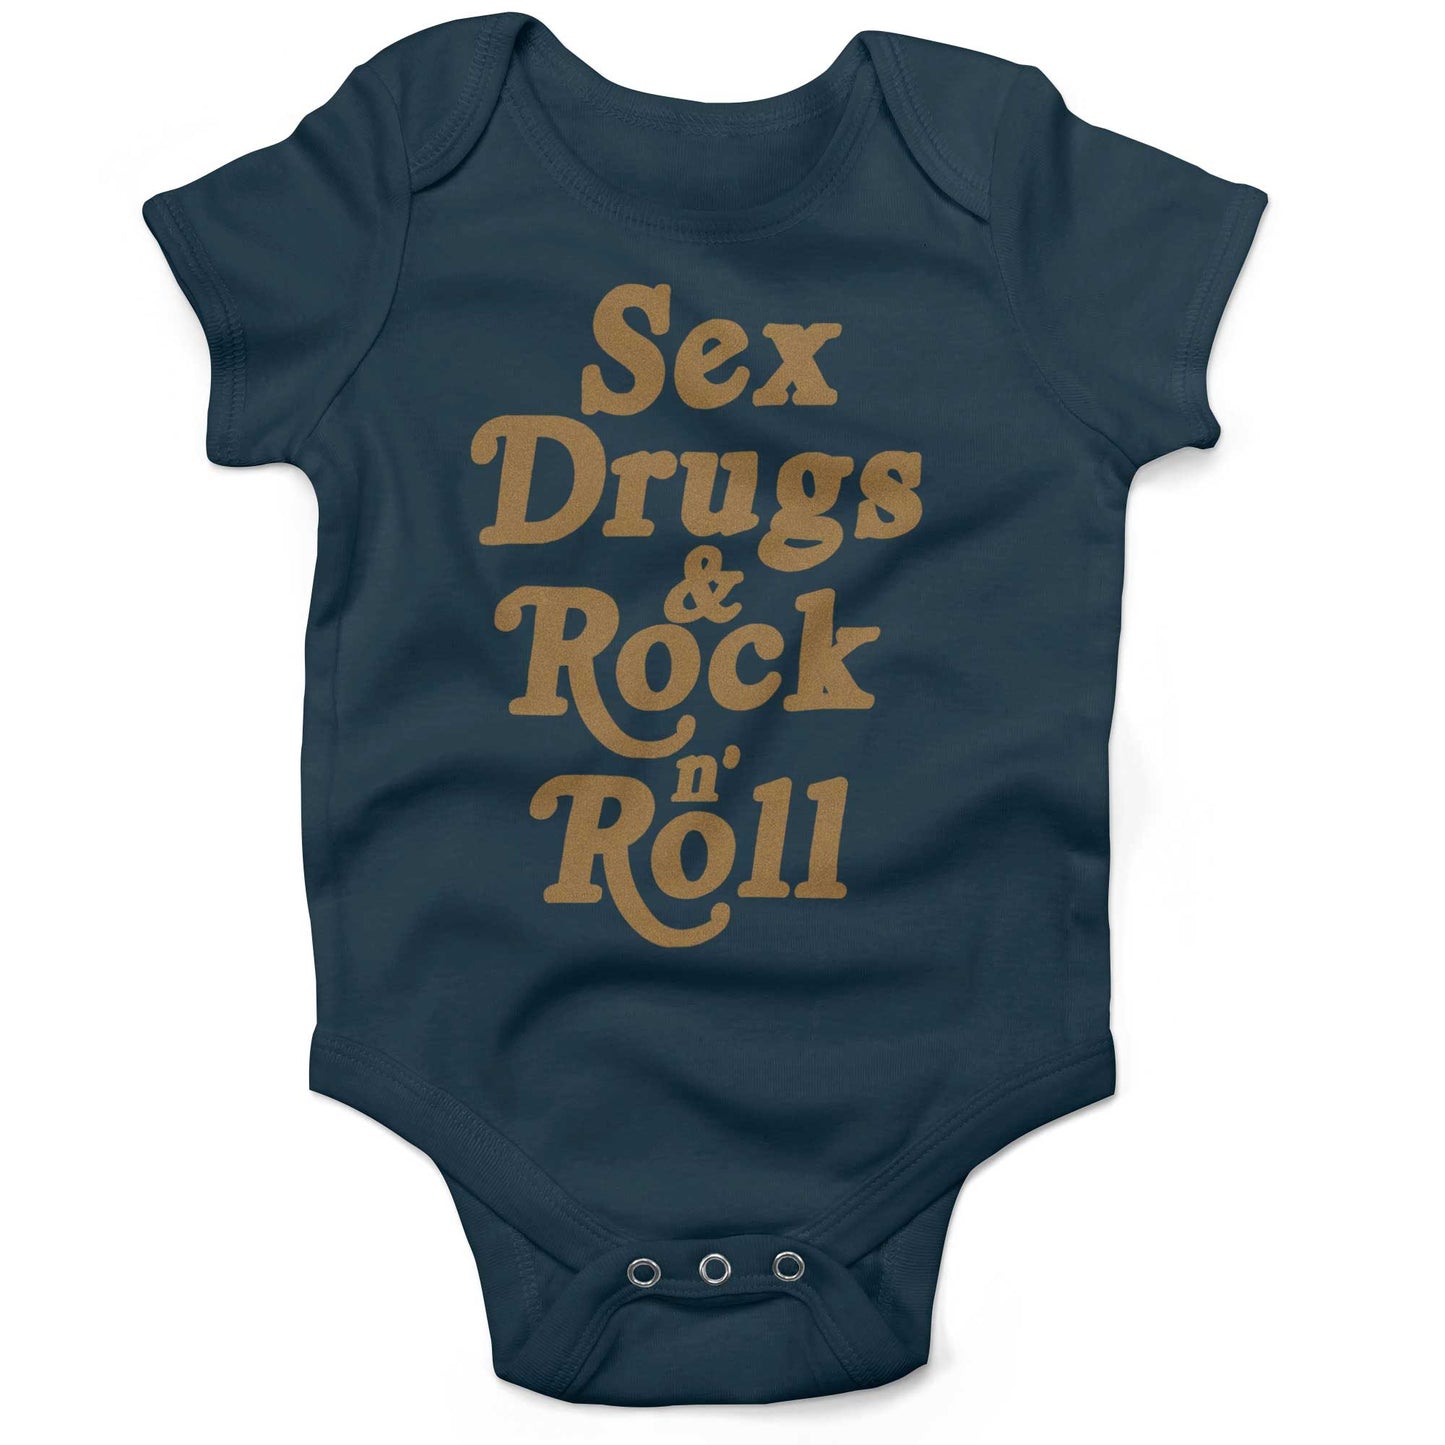 Sex, Drugs & Rock 'n Roll Infant Bodysuit or Raglan Baby Tee-Organic Pacific Blue-3-6 months